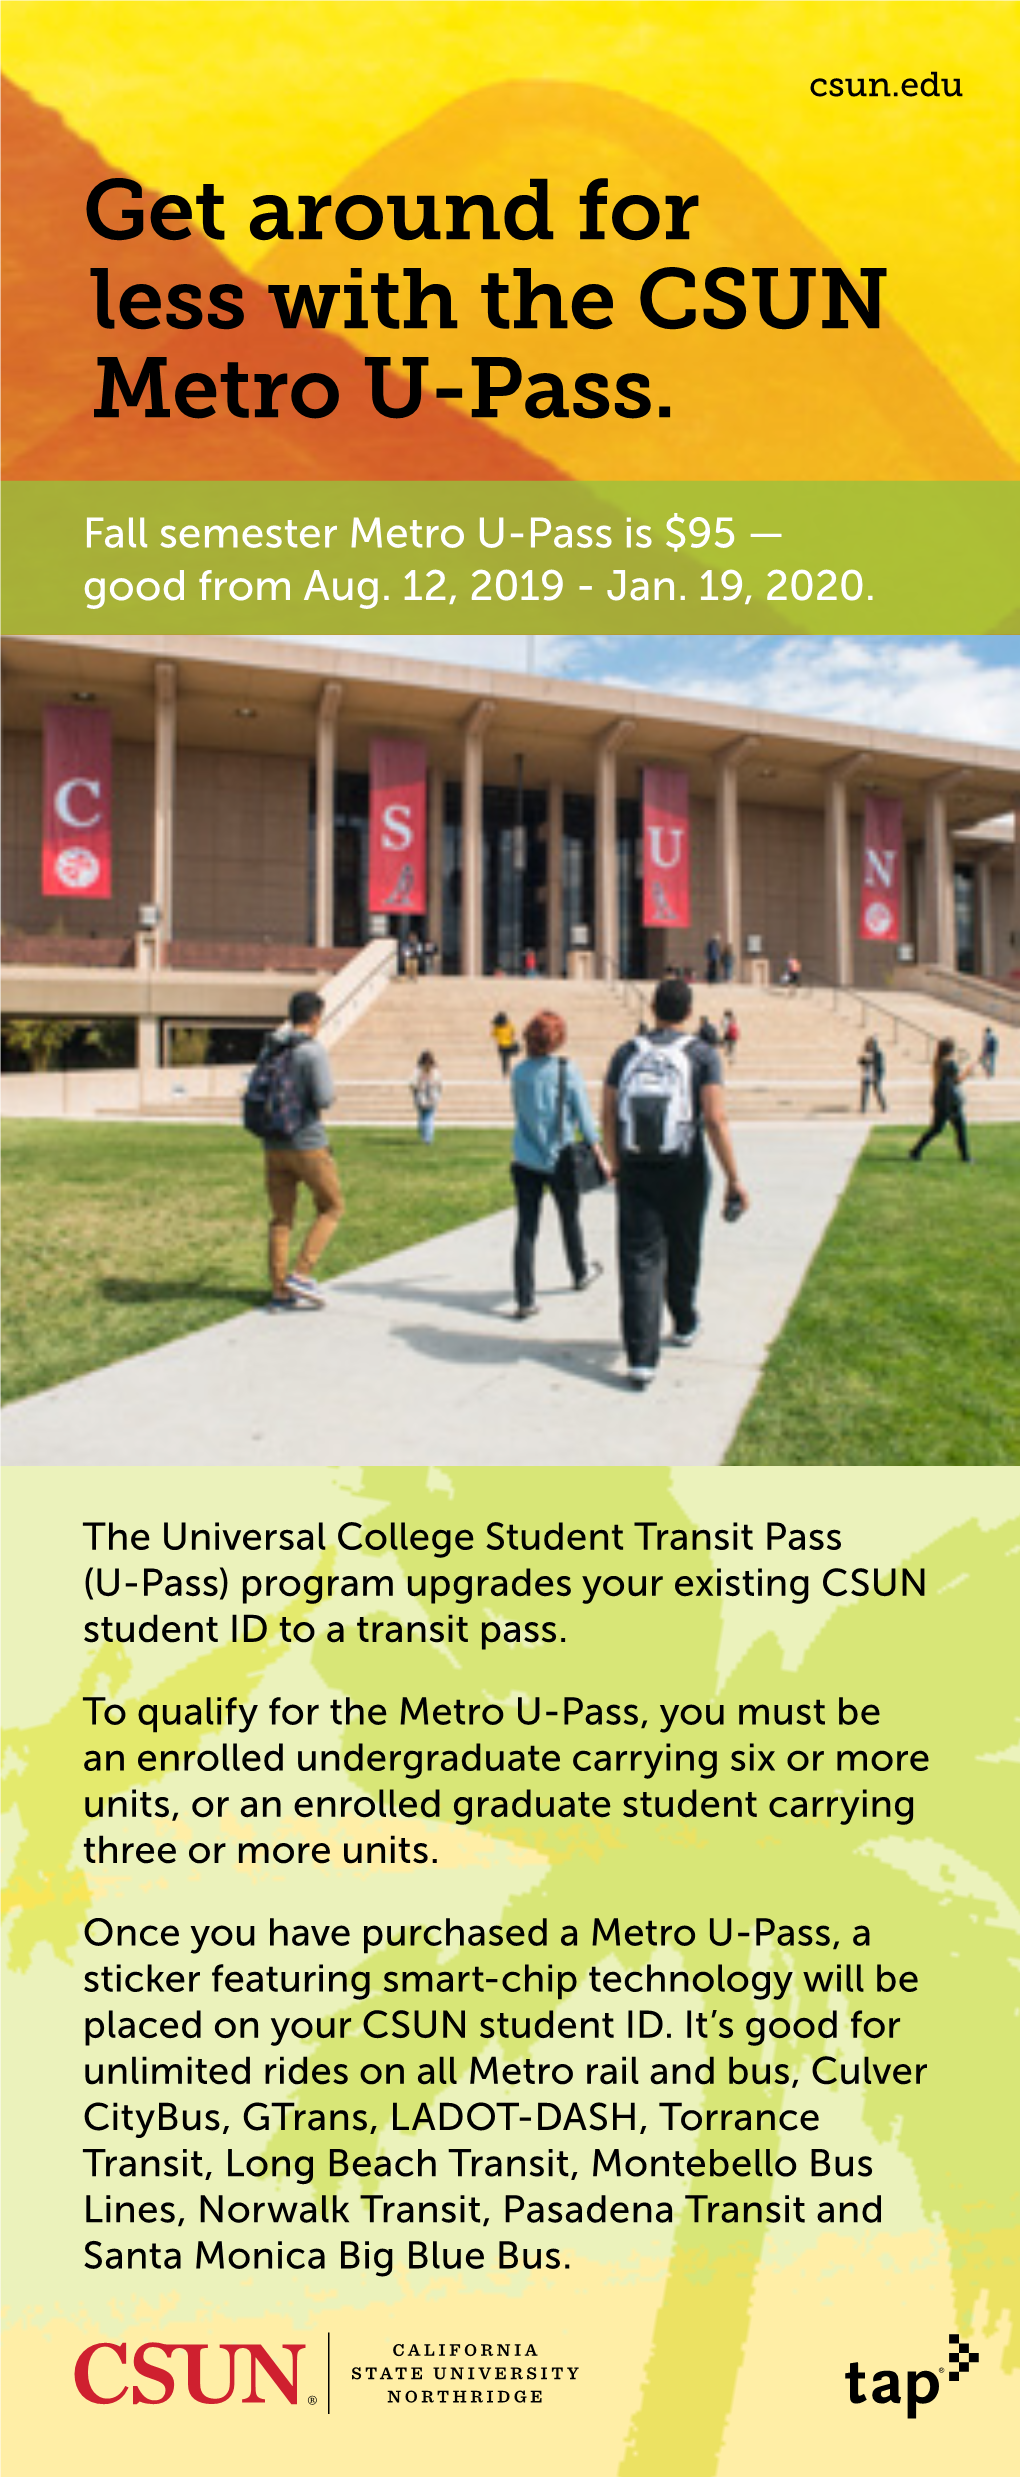 Get Around for Less with the CSUN Metro U-Pass